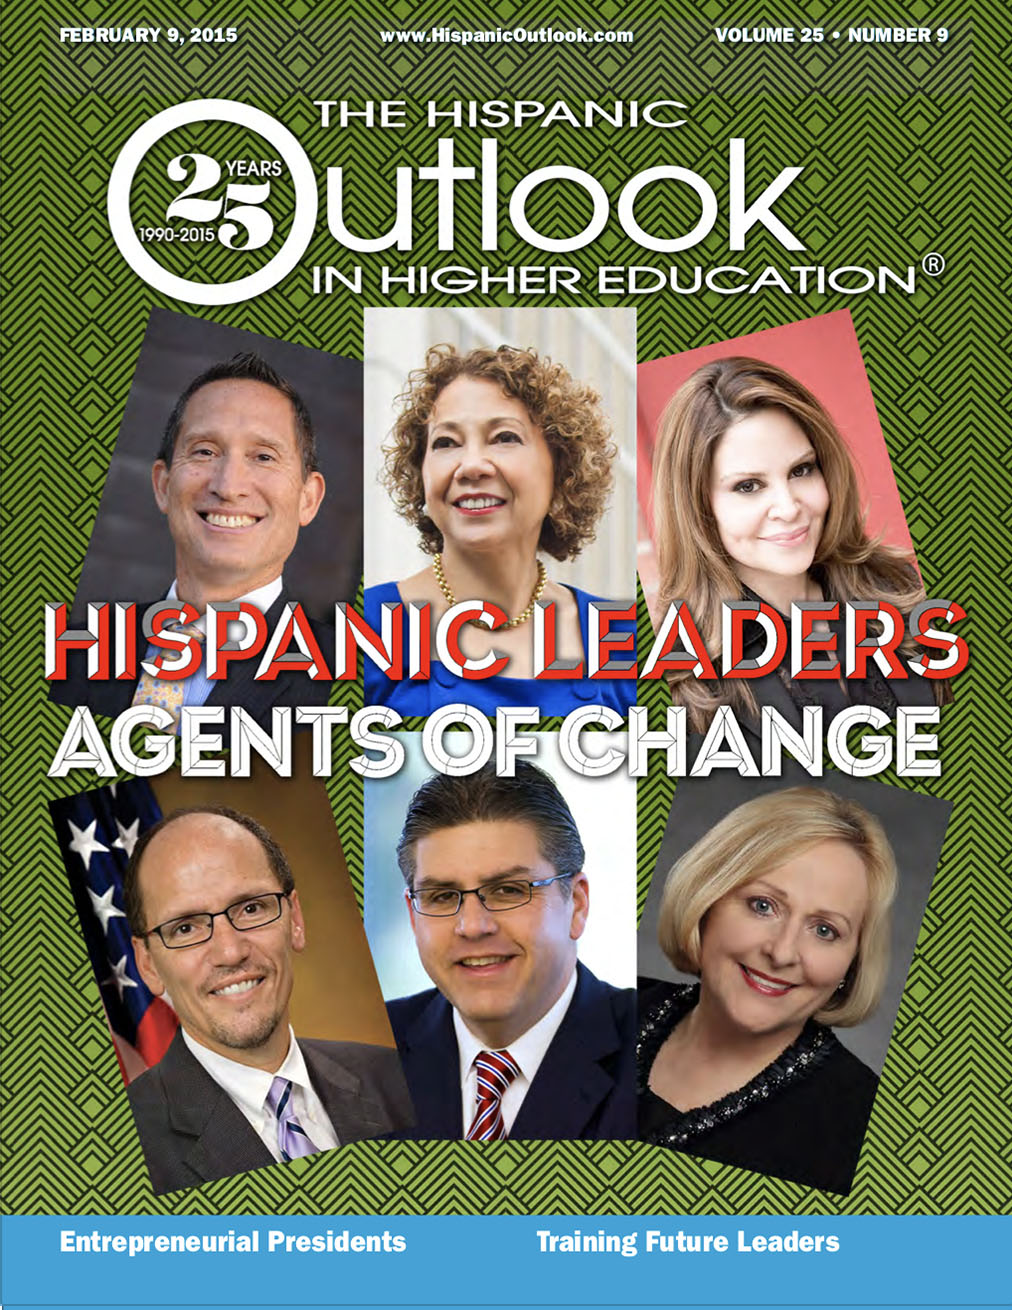 Hispanic Leaders Agents of Change